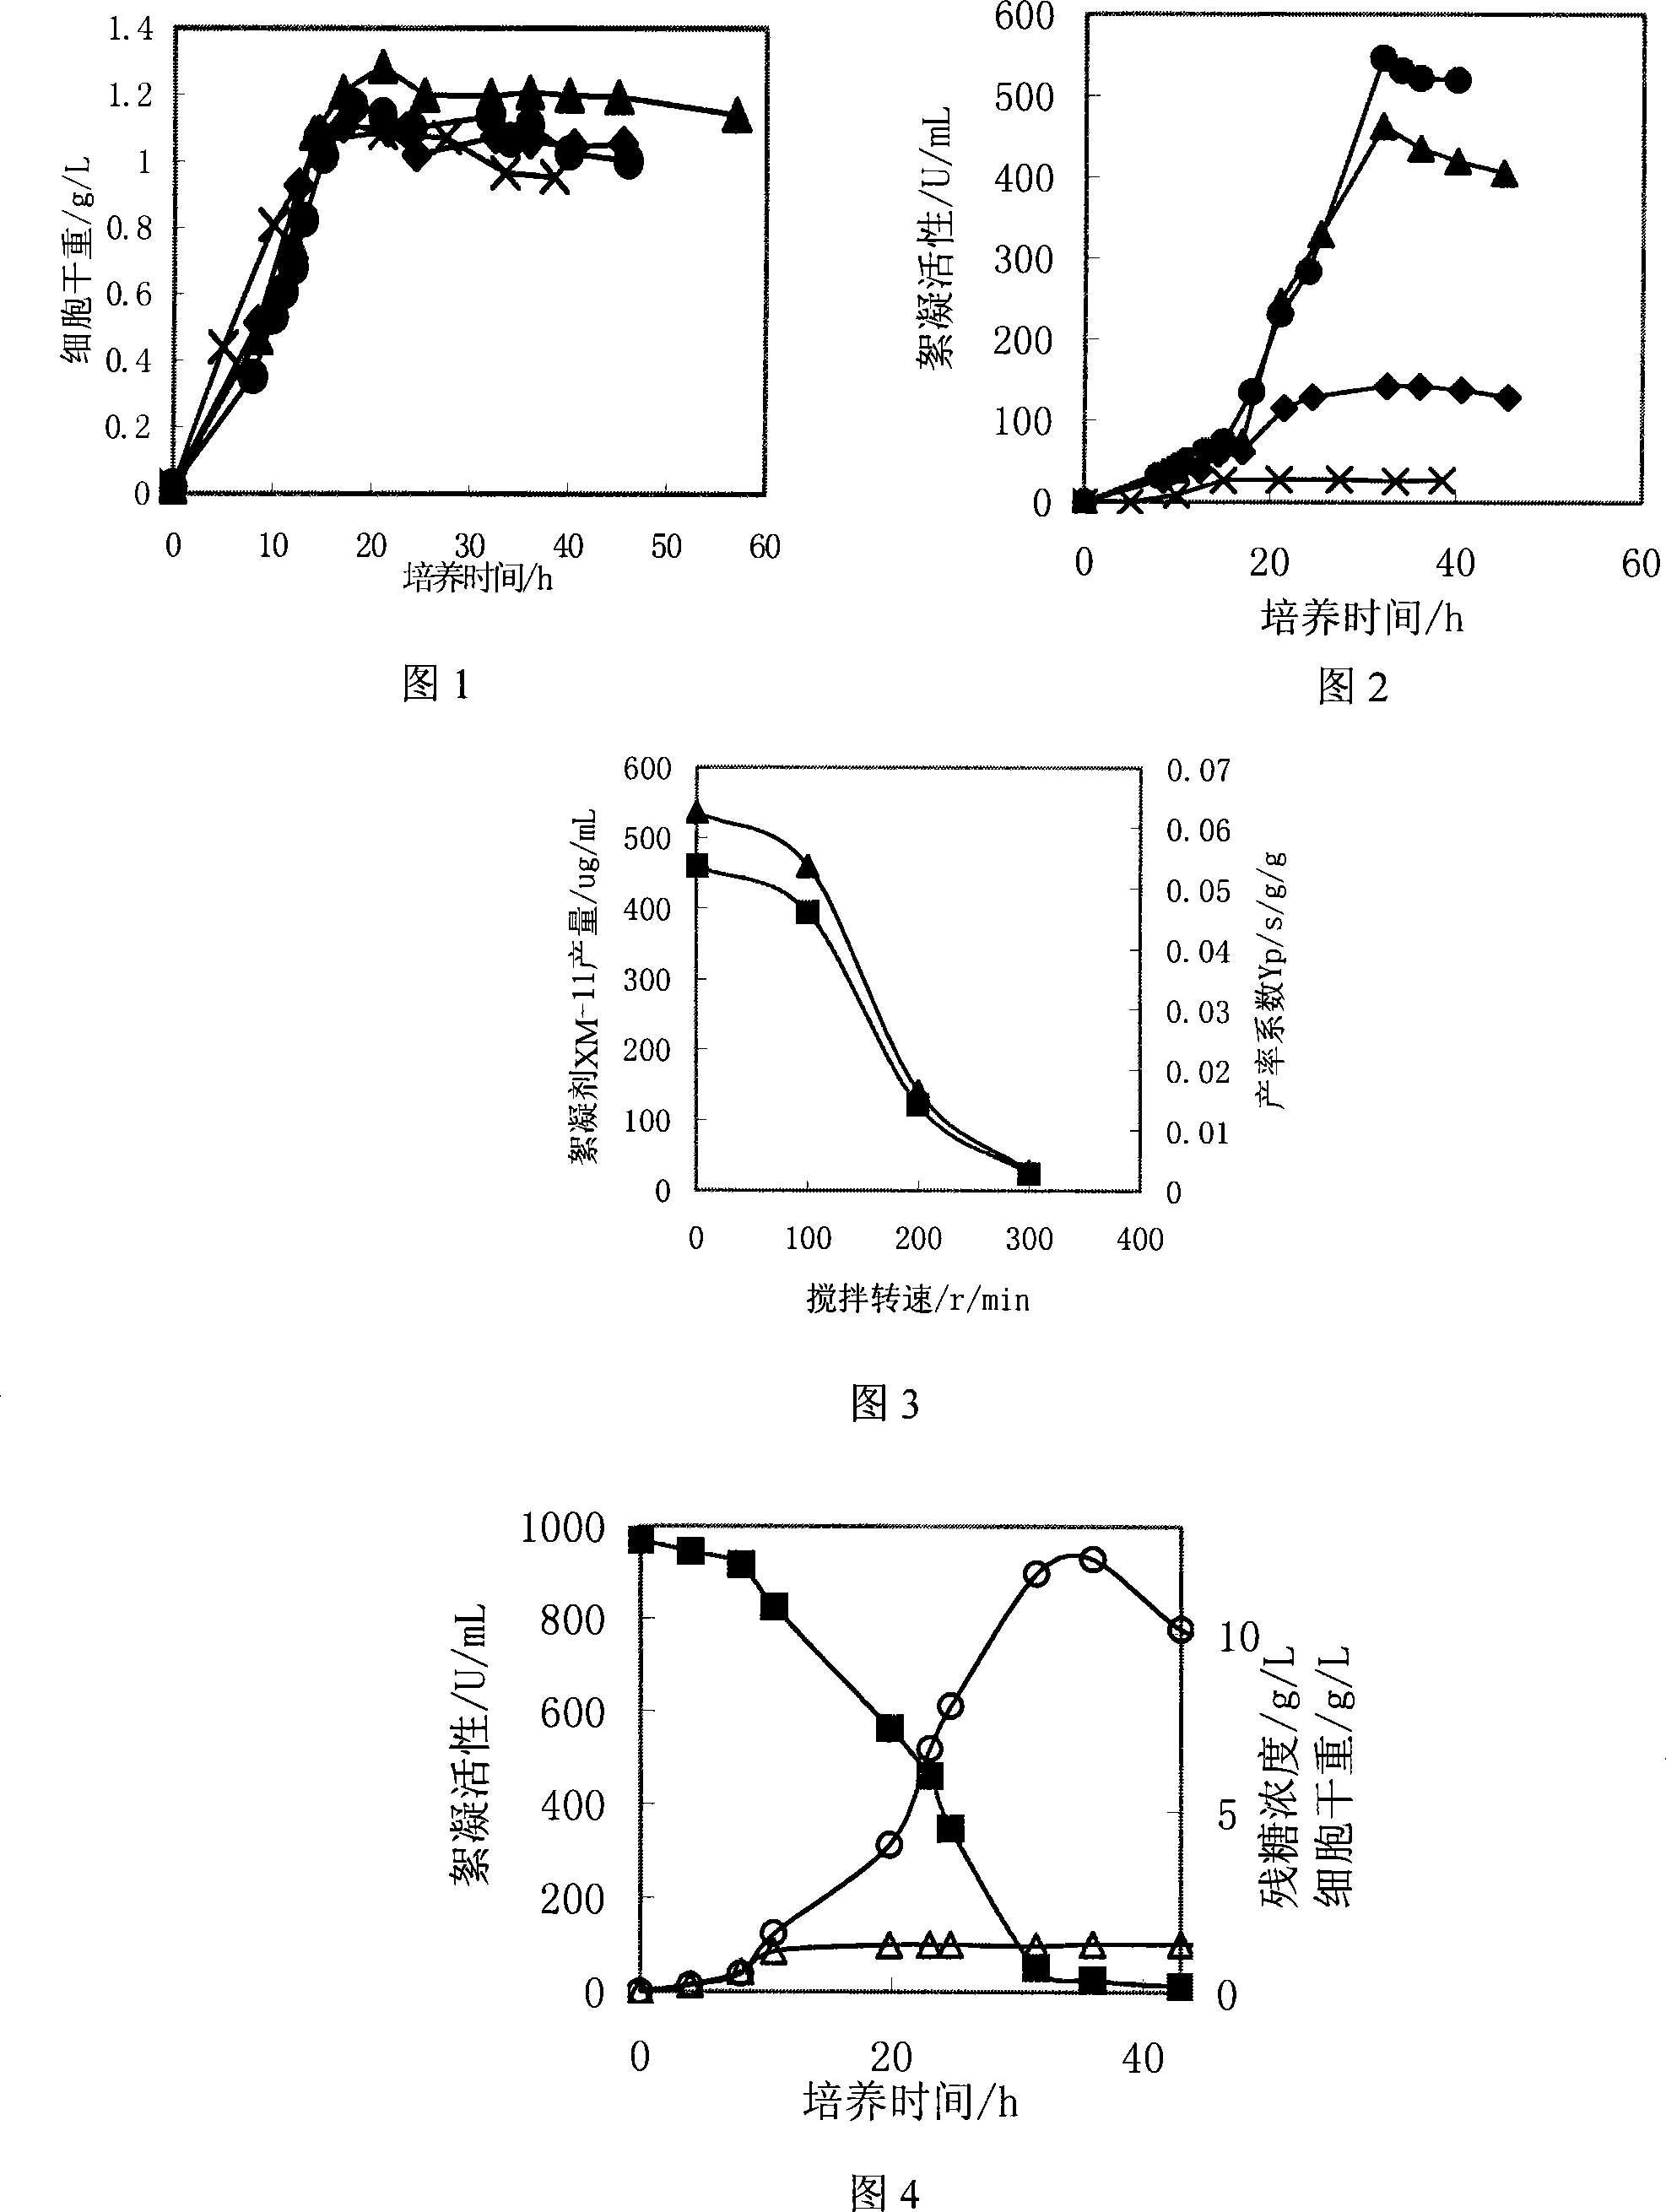 Control method for biological flocculant XM-11 fermentation process grading oxygen supply